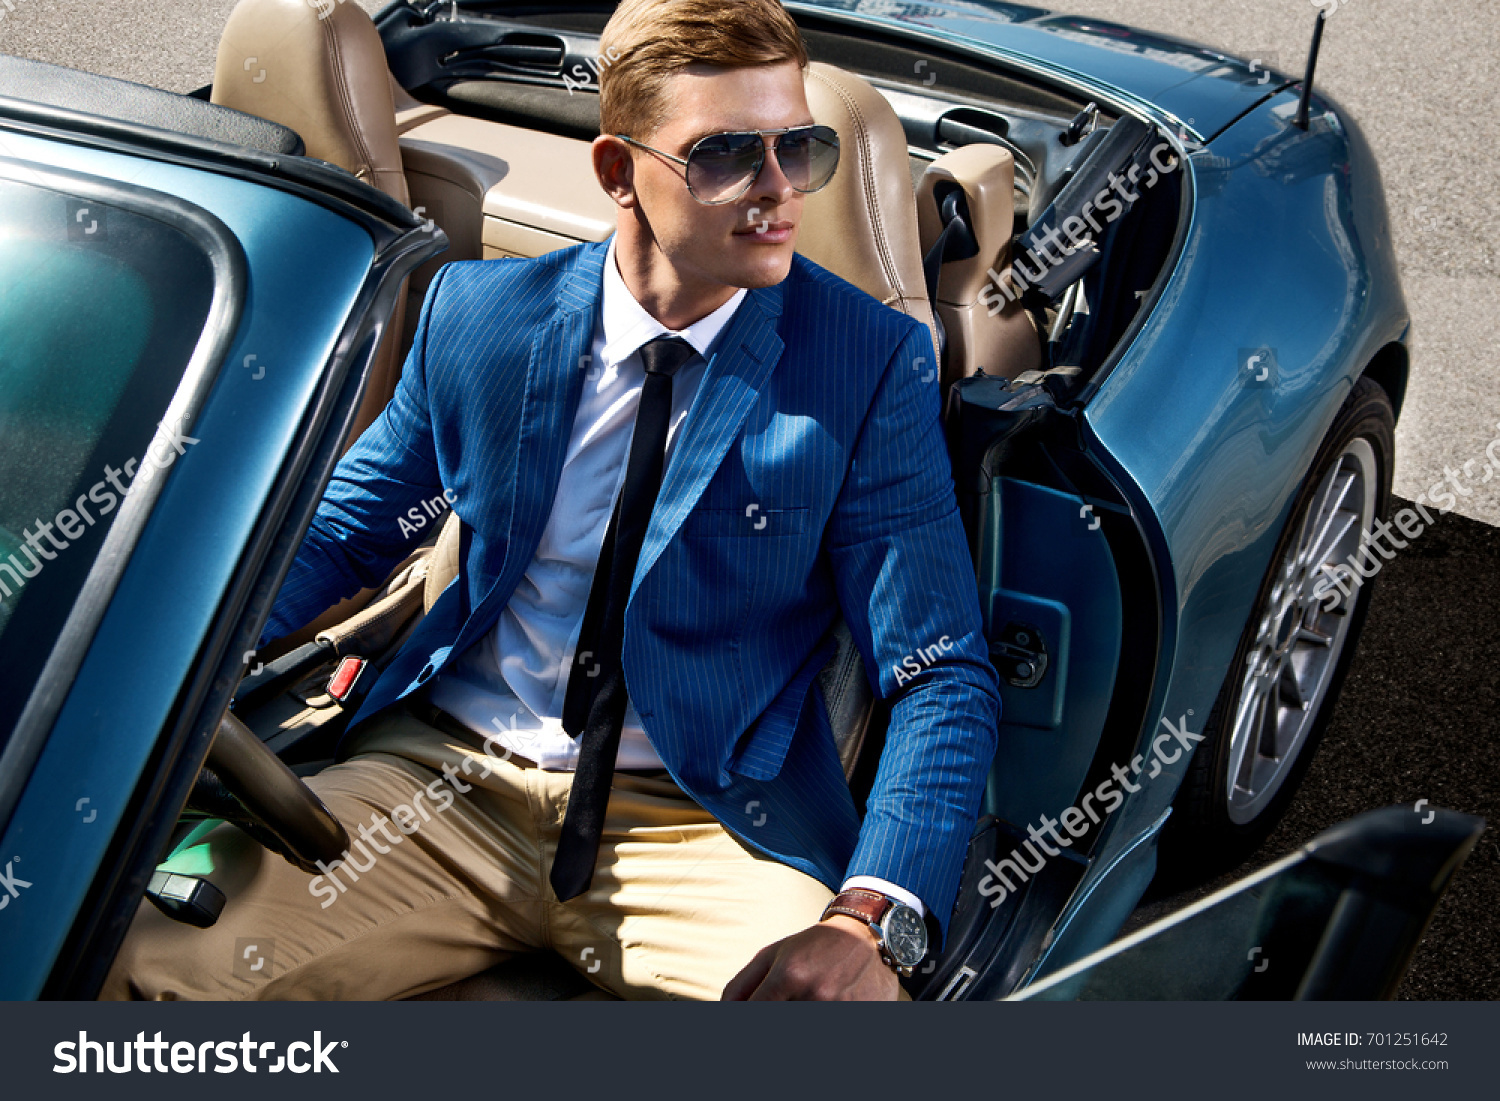 9,038 Rich man sunglasses Images, Stock Photos & Vectors | Shutterstock